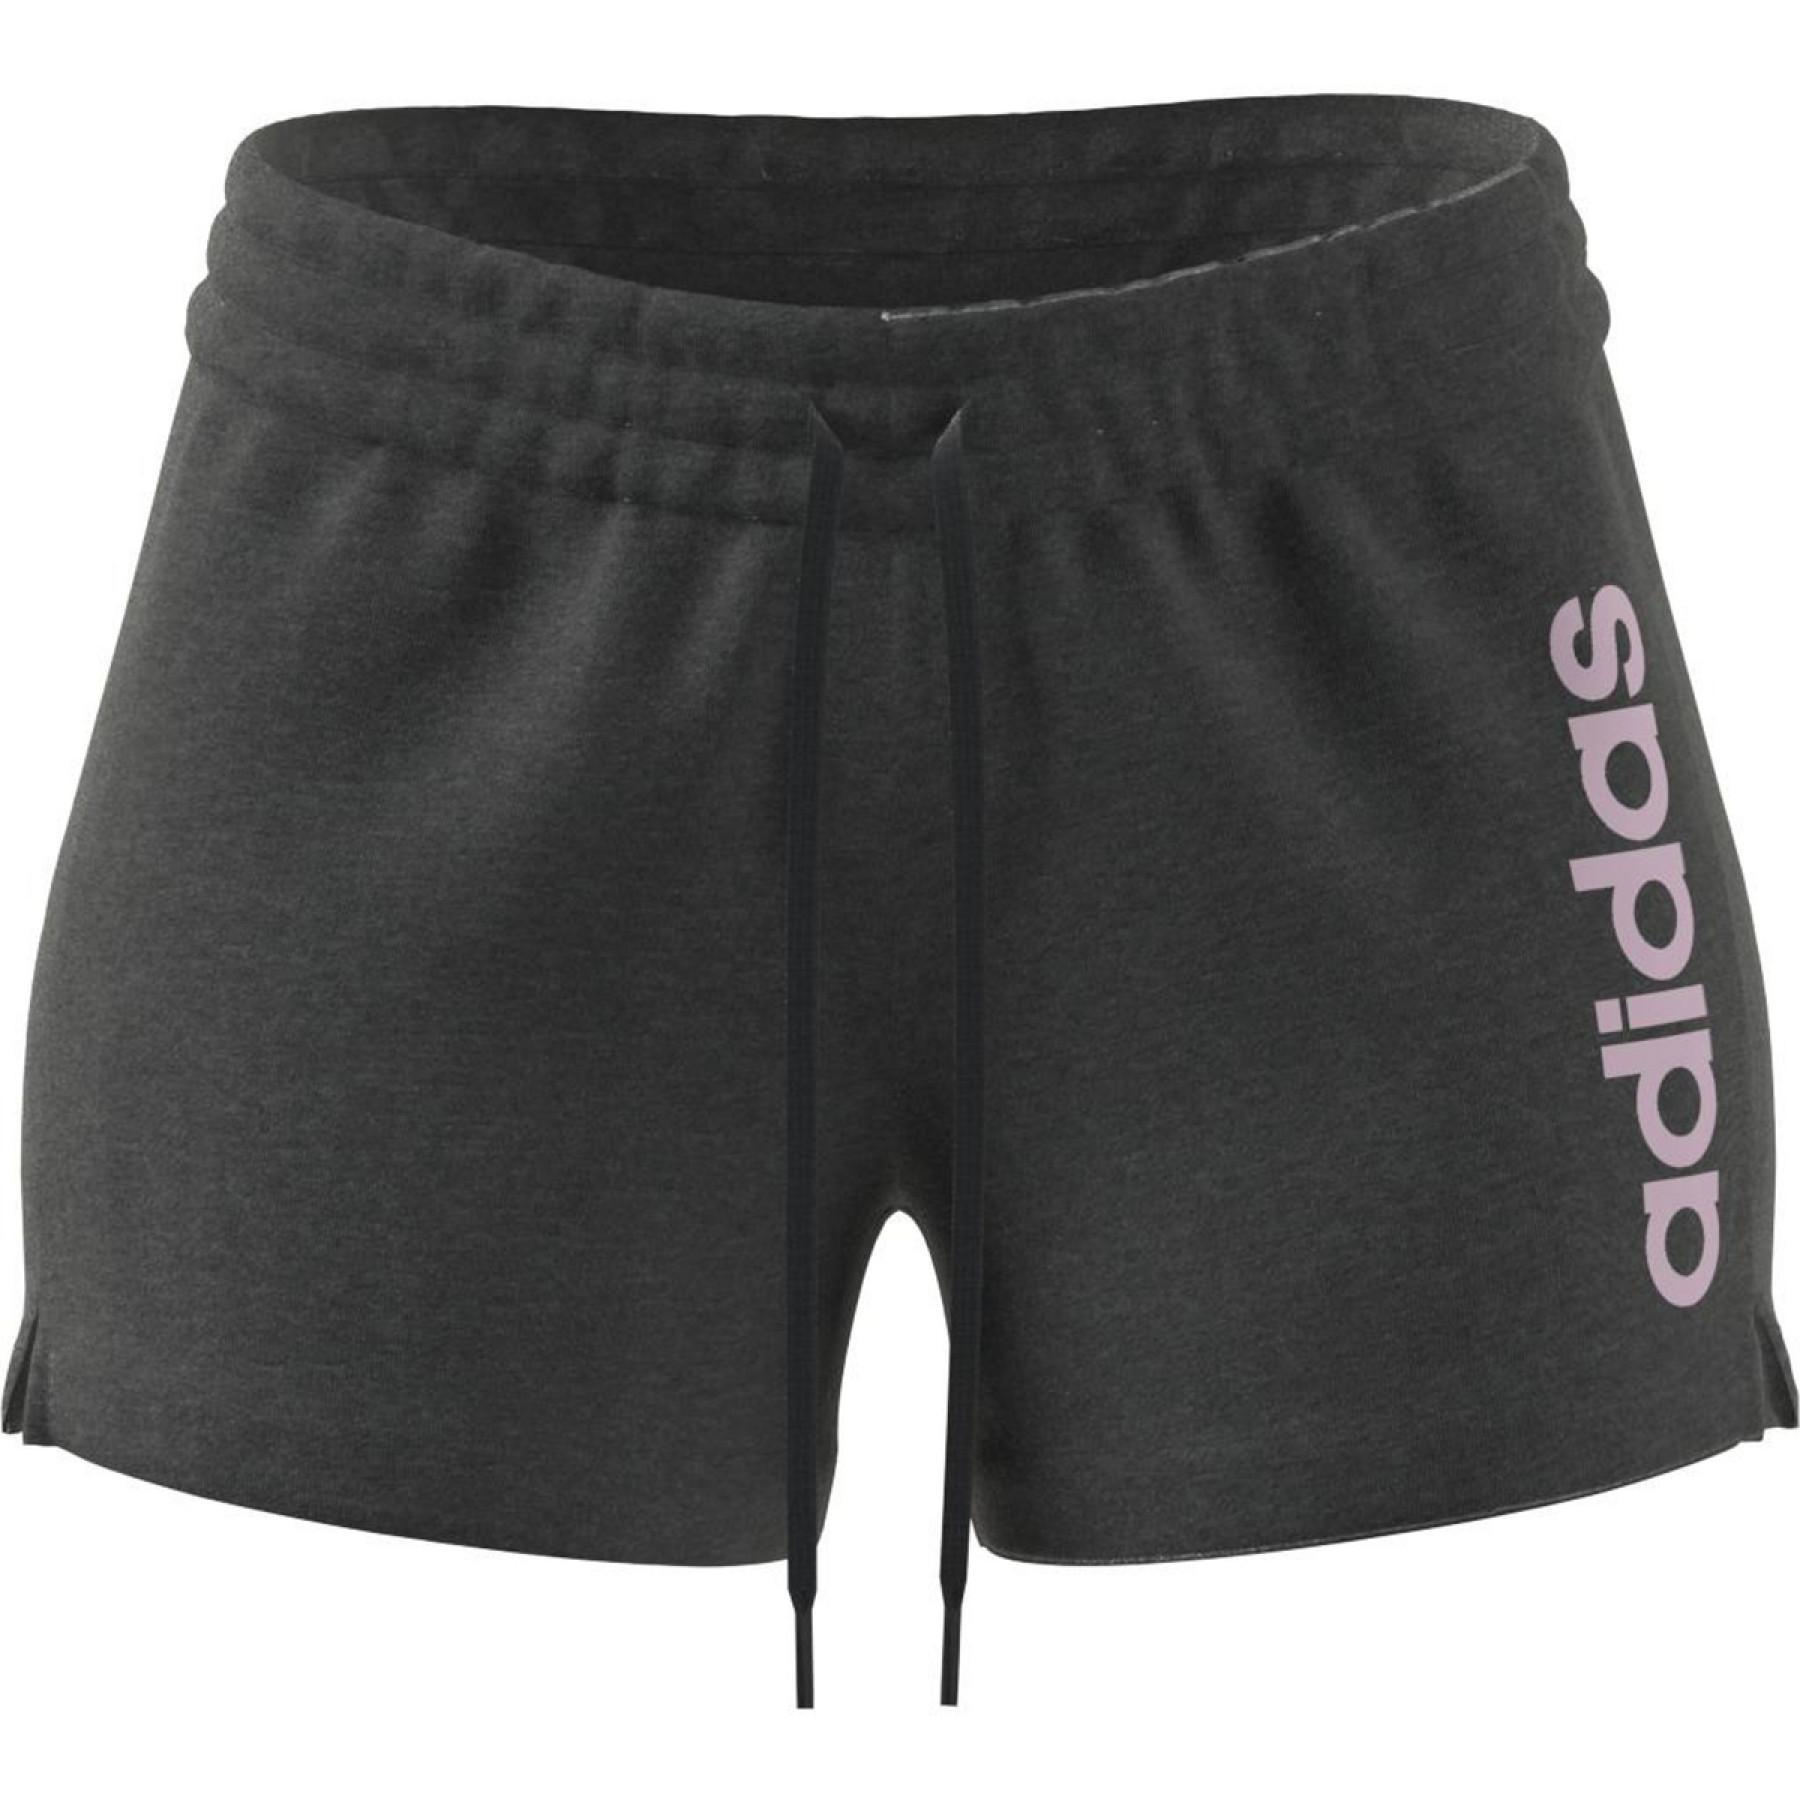 Women's shorts adidas Essential slim Logo